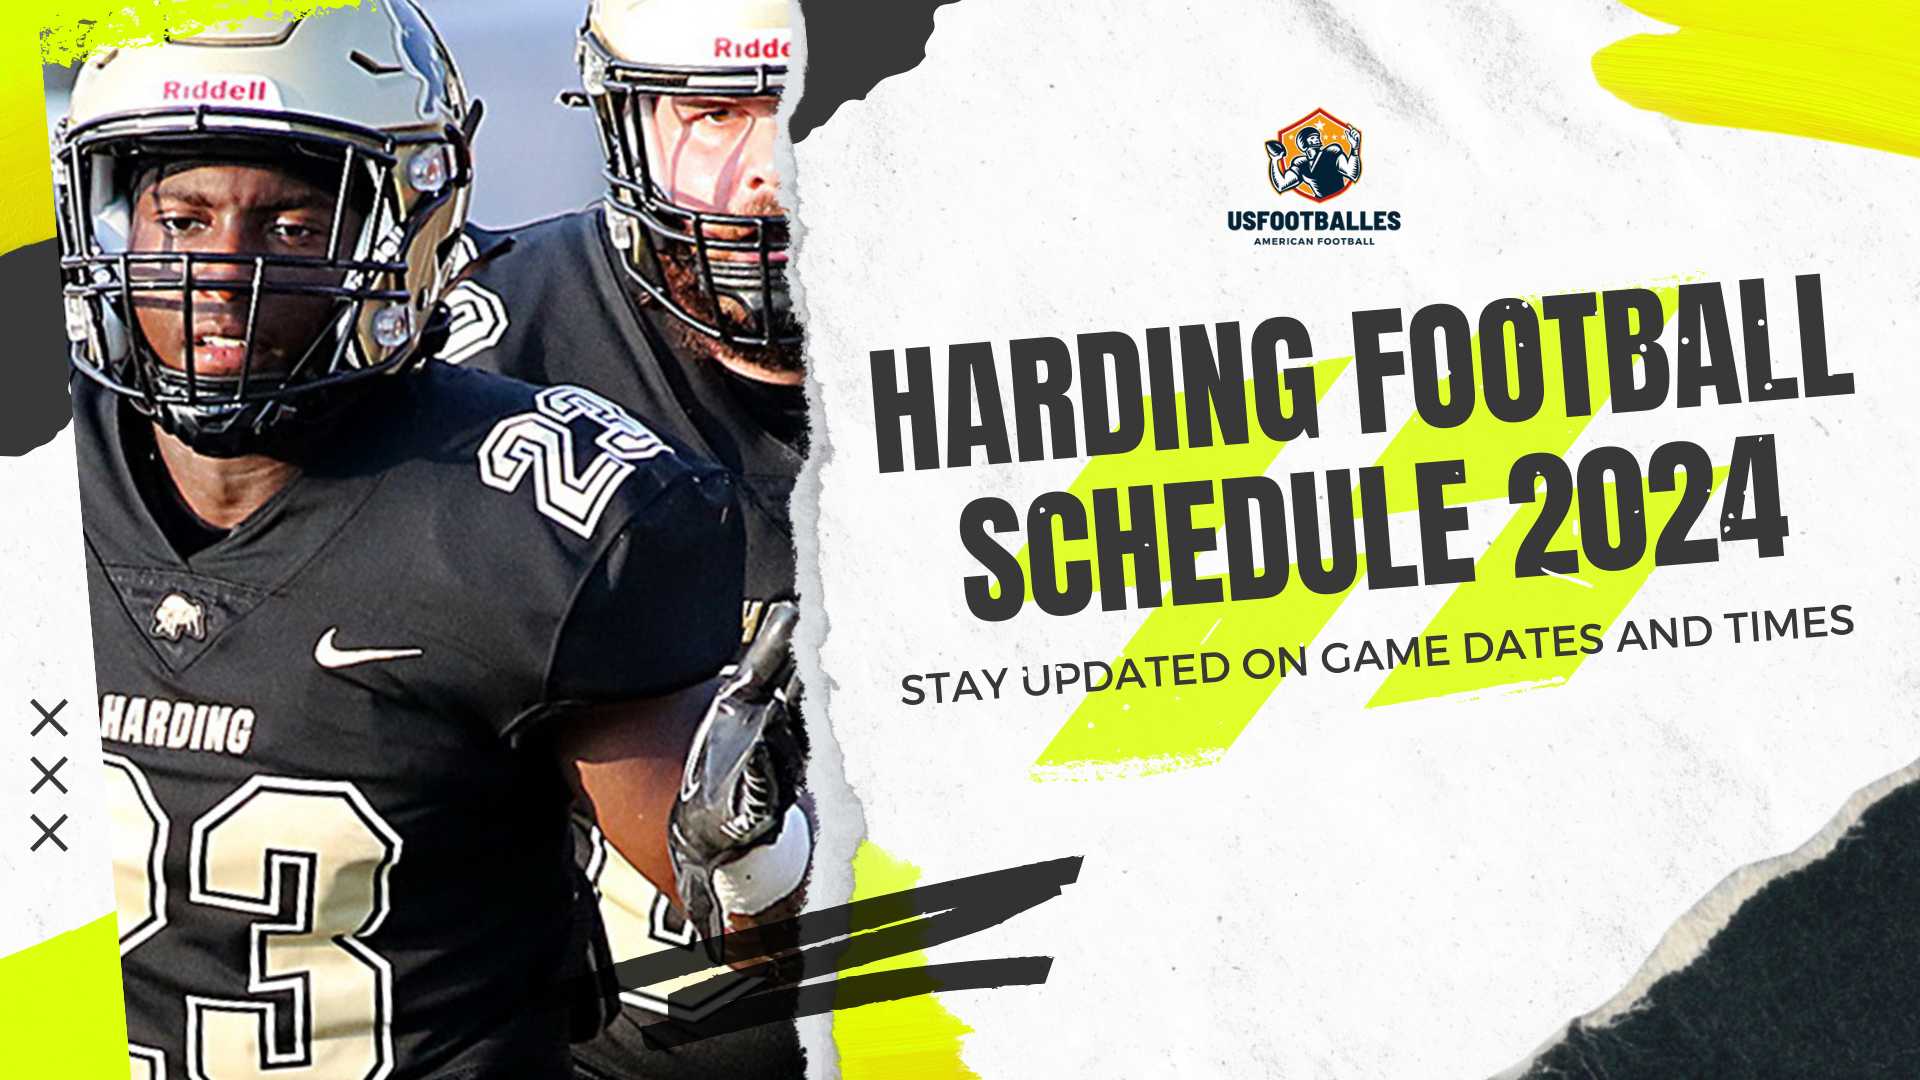 Harding Football Schedule 2024